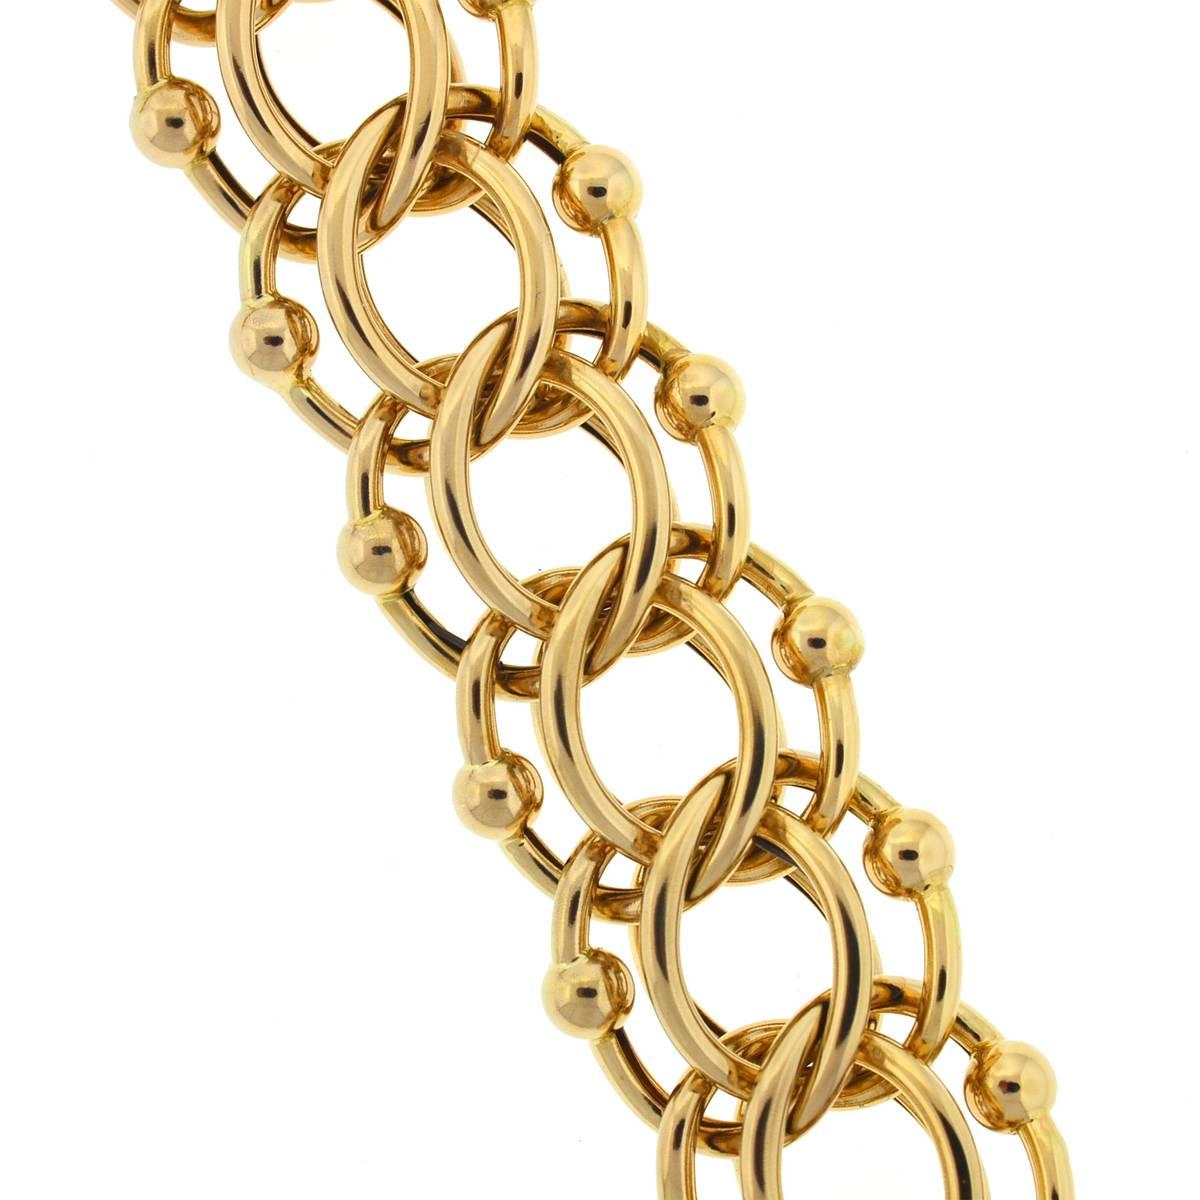 Company - Tiffany & Co
Style - Interlocking Choker Necklace
Metal - 14k Yellow Gold
Chain Length - 16